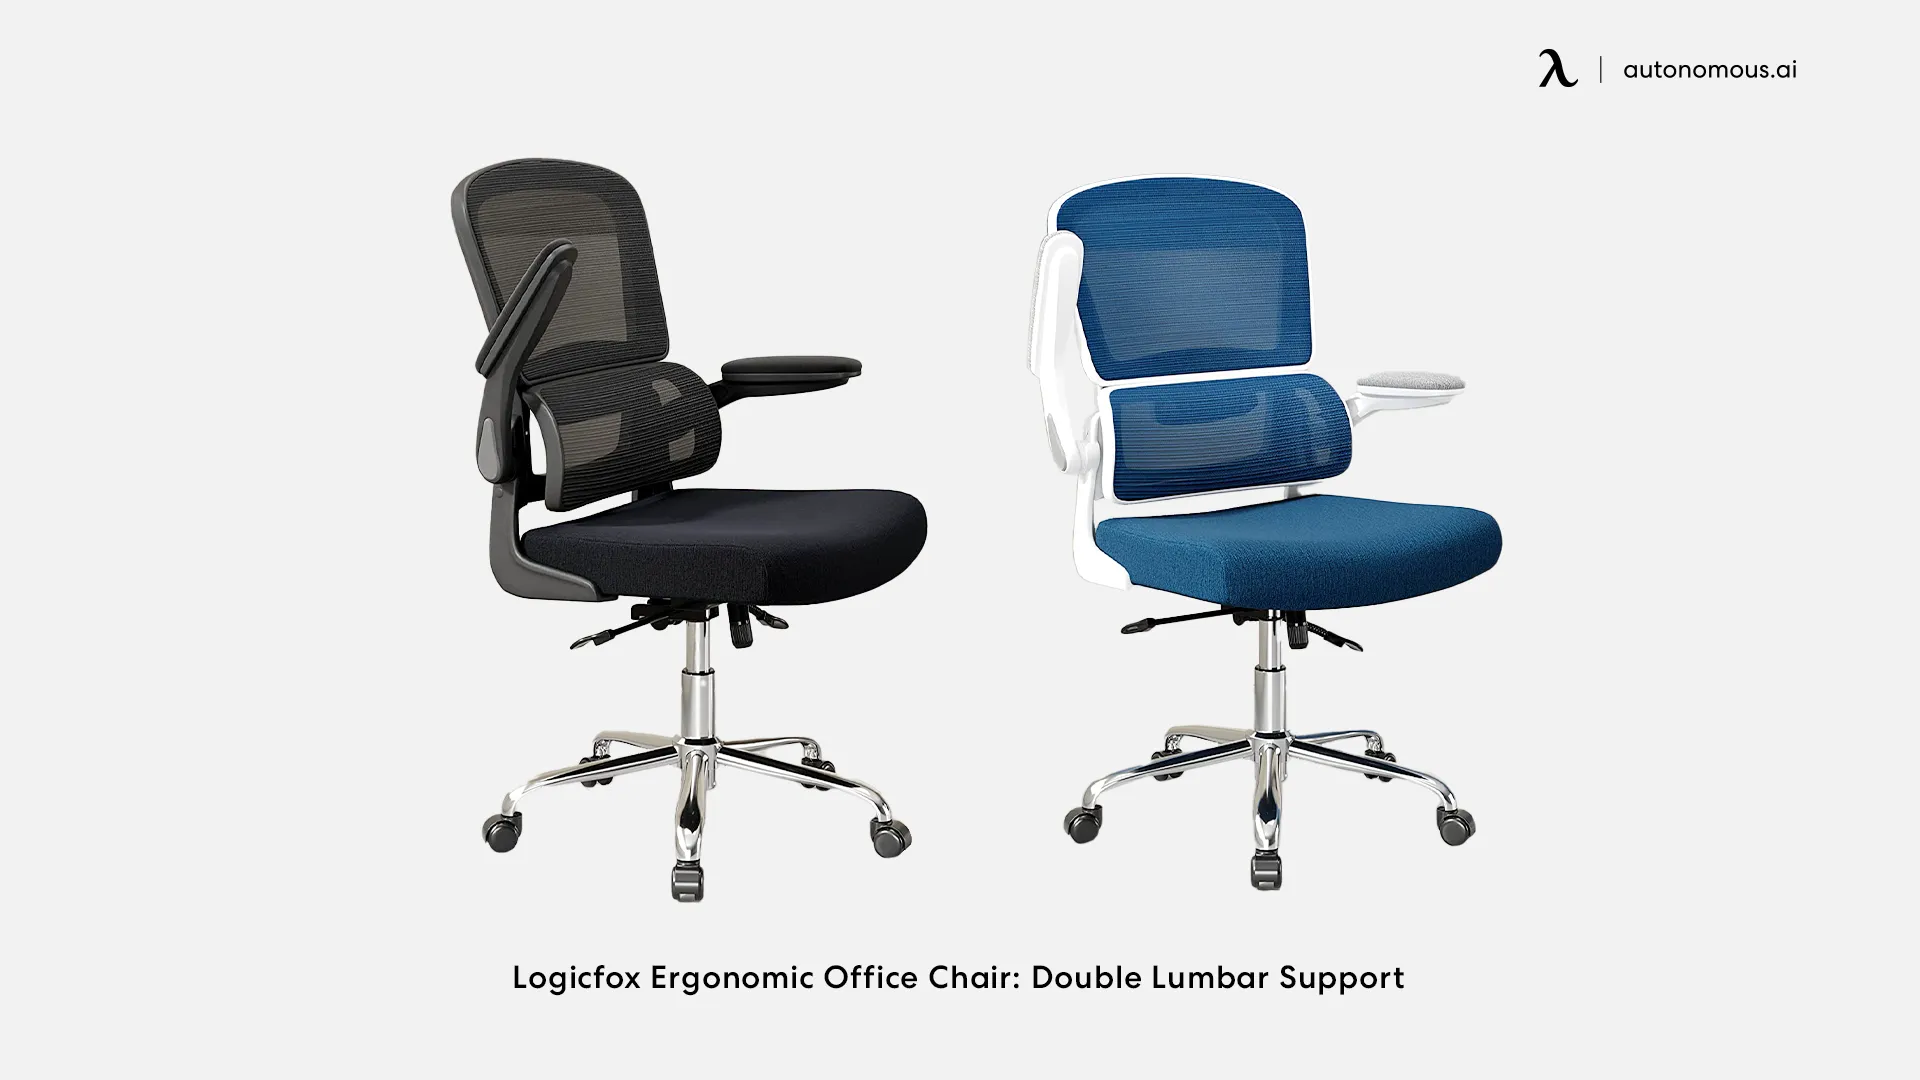 Logicfox Double Lumbar Support Office Chair